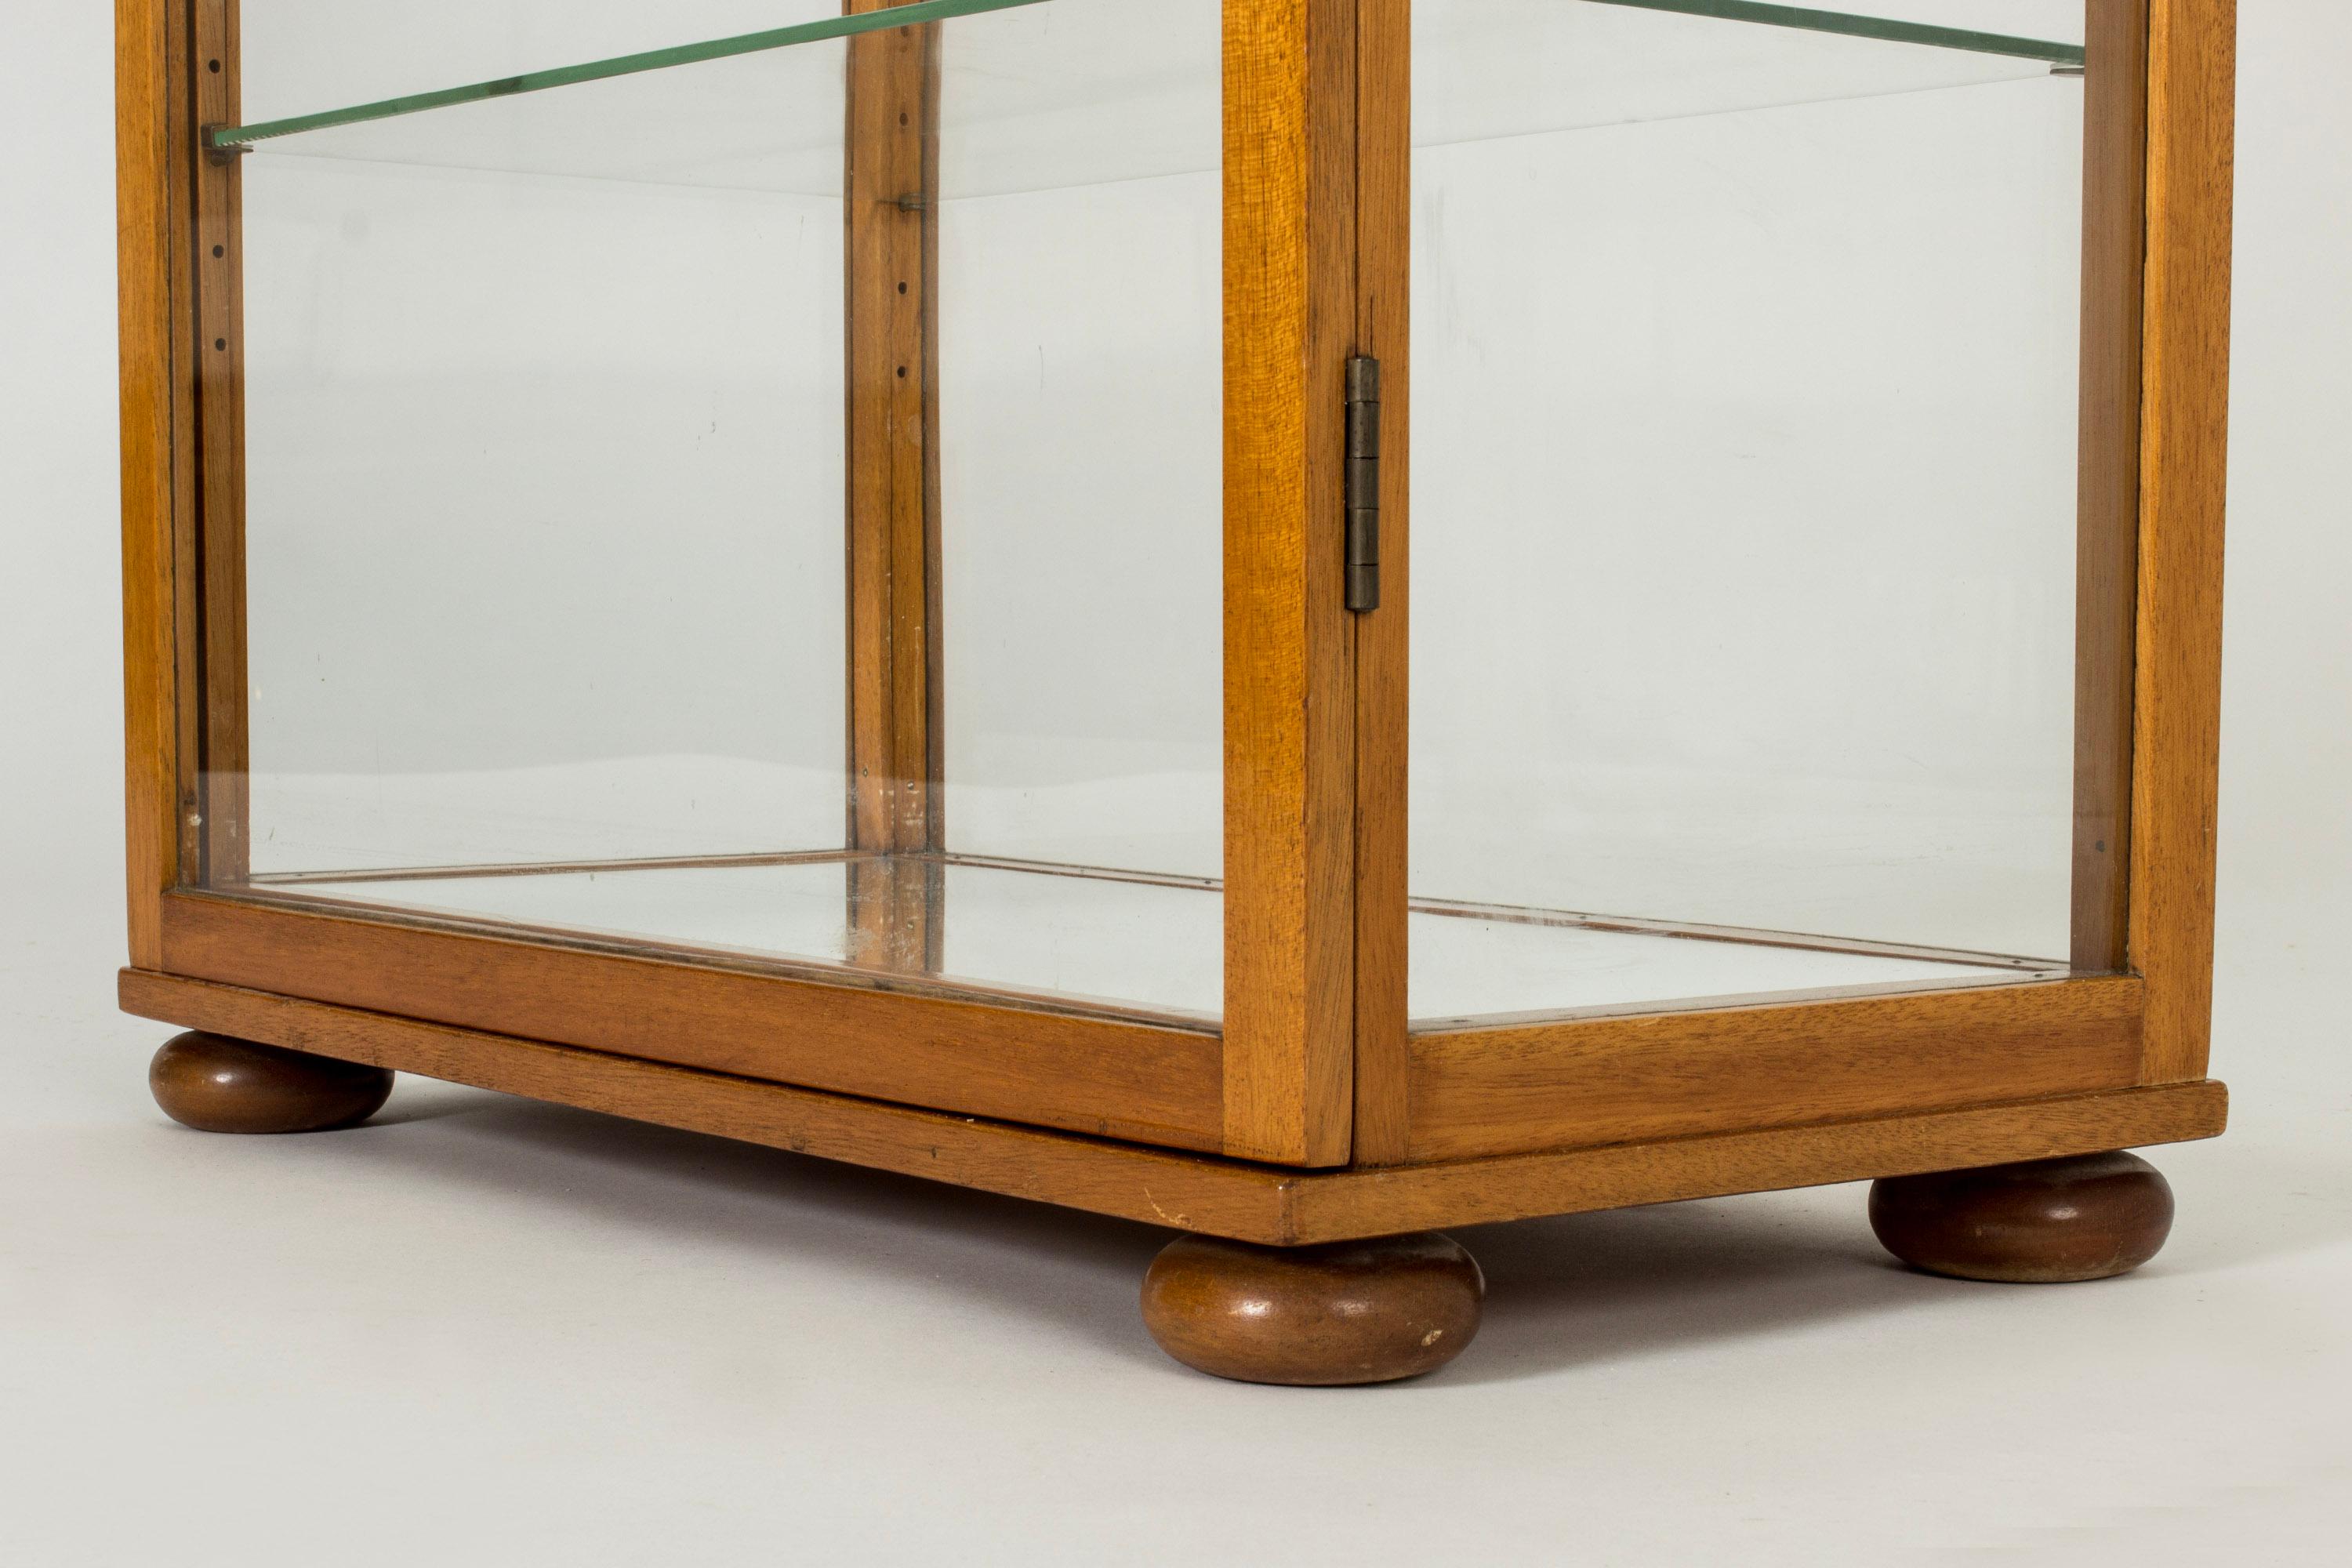 Glass Vintage Modernist Table Vitrine Cabinet by Josef Frank, Svenskt Tenn, 1950s For Sale